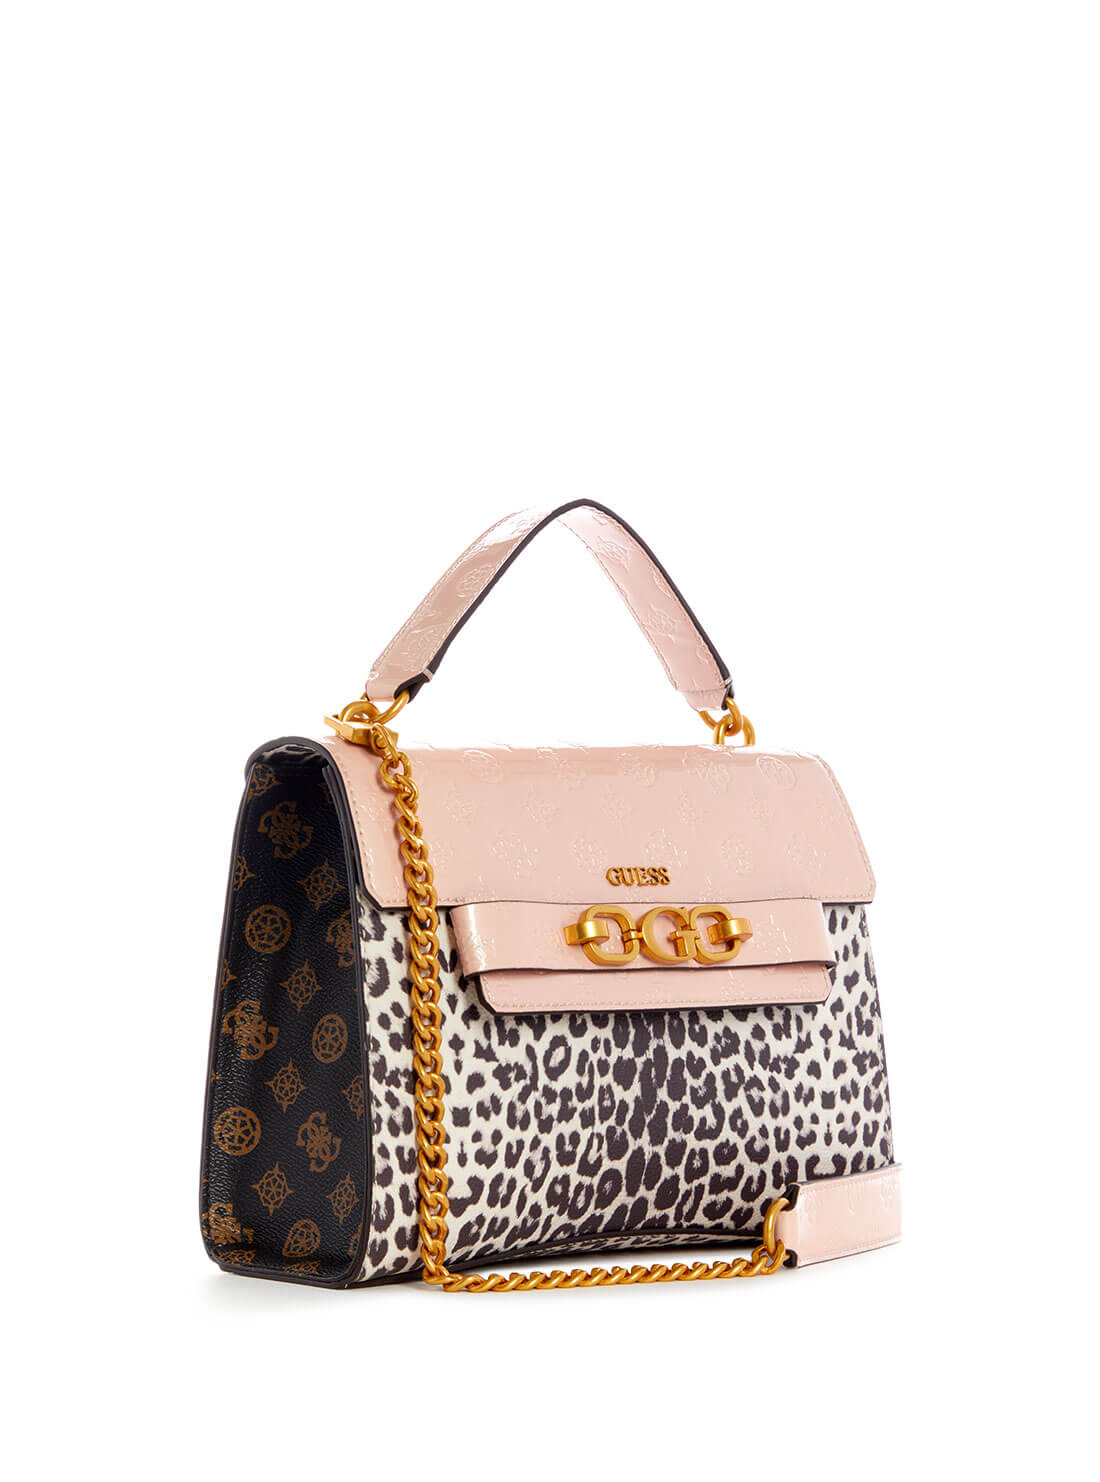 Guess Crossbody Handbag Women Small Multicolor Leopard Brown Trim Purse Bag  | eBay